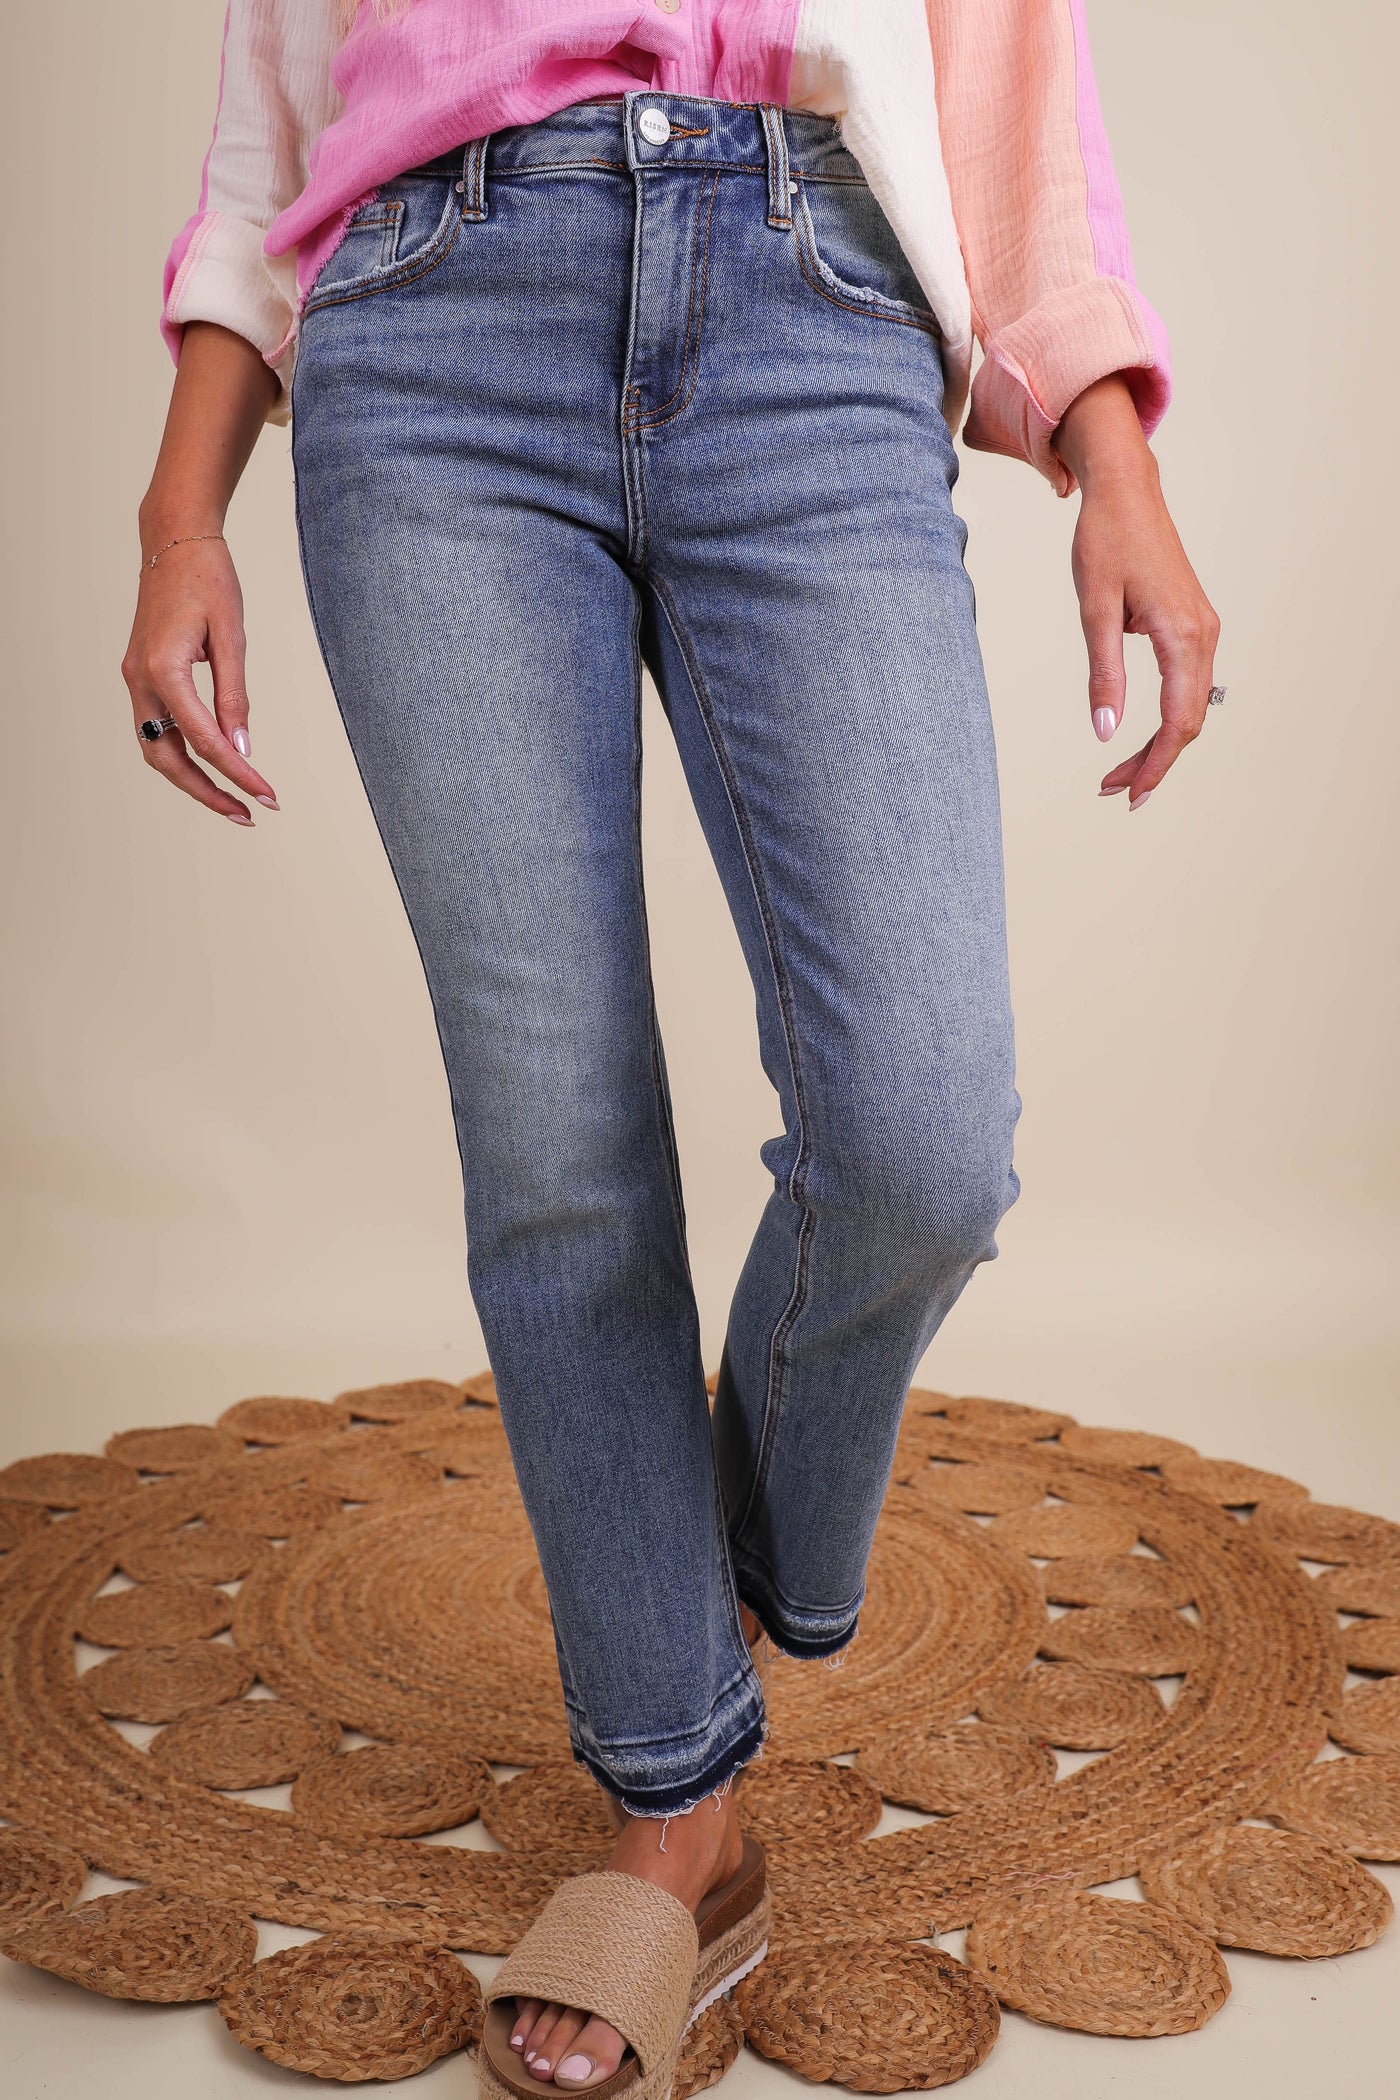 Women's Straight Leg Jeans- Women's Stretchy Jeans- Risen Jeans